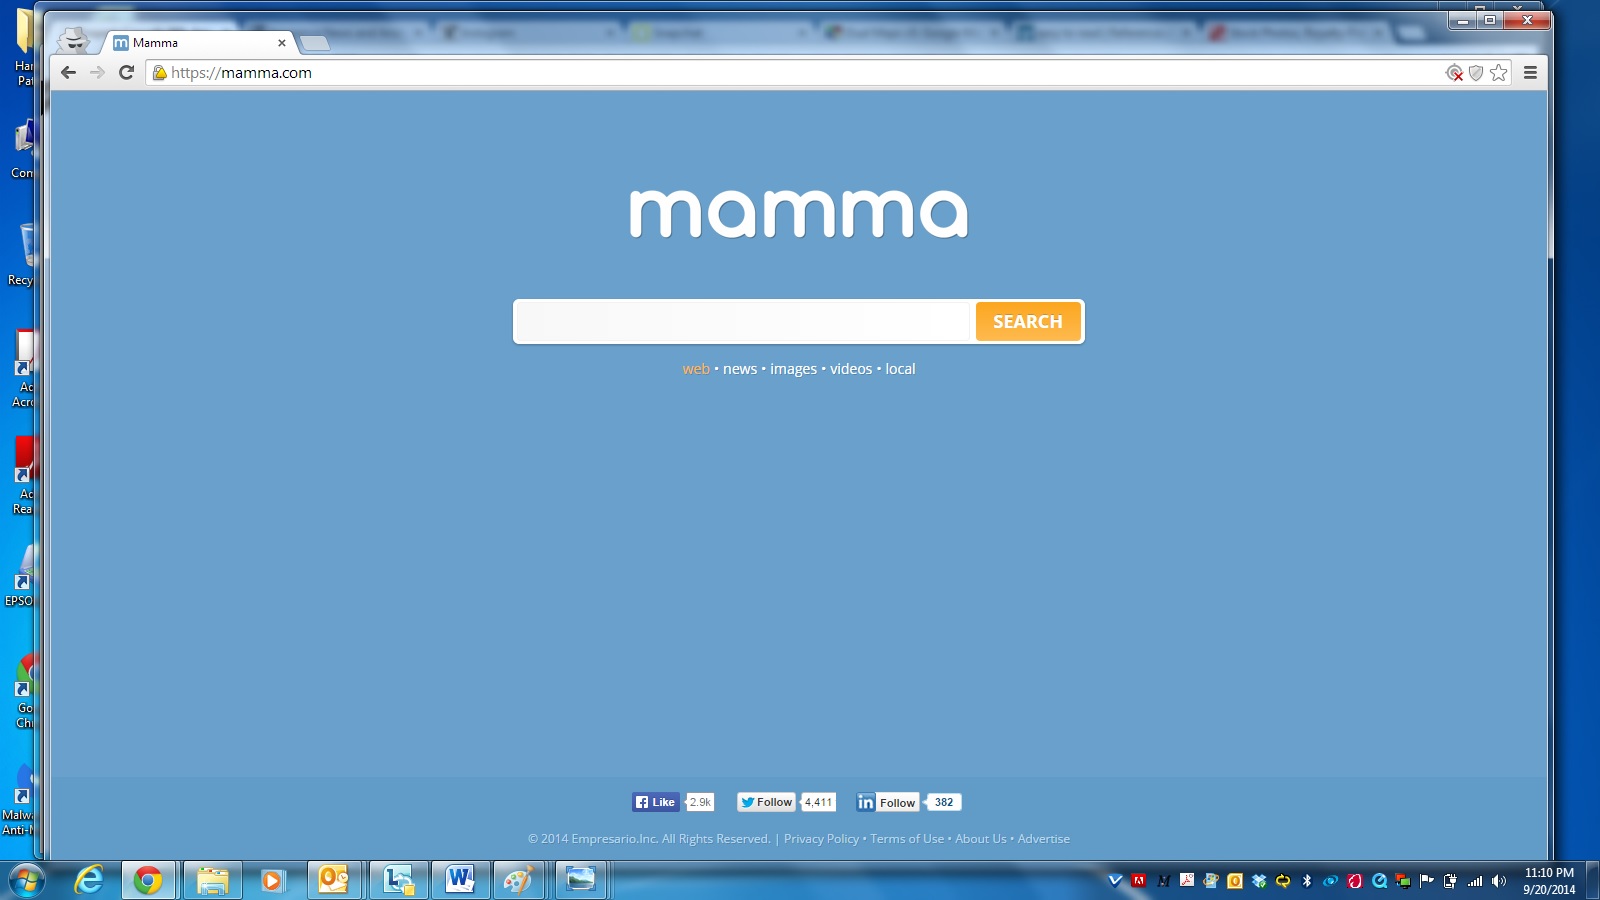 mamma.com